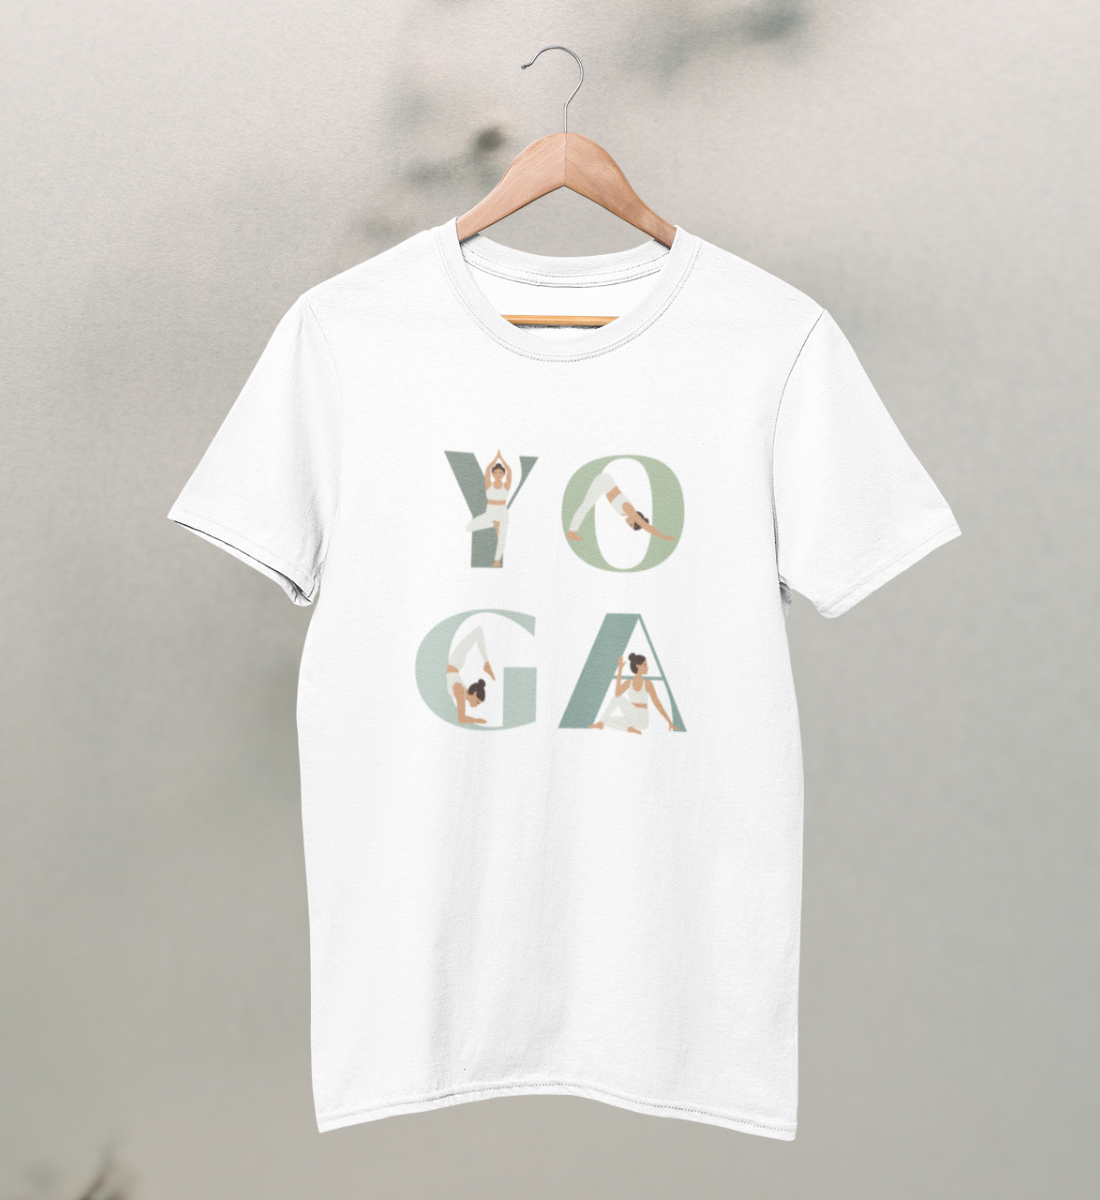 yoga girl l bio t-shirt kinder weiß l yoga shirt l yoga kleidung bio-baumwolle l umweltfreundliche mode online shoppen